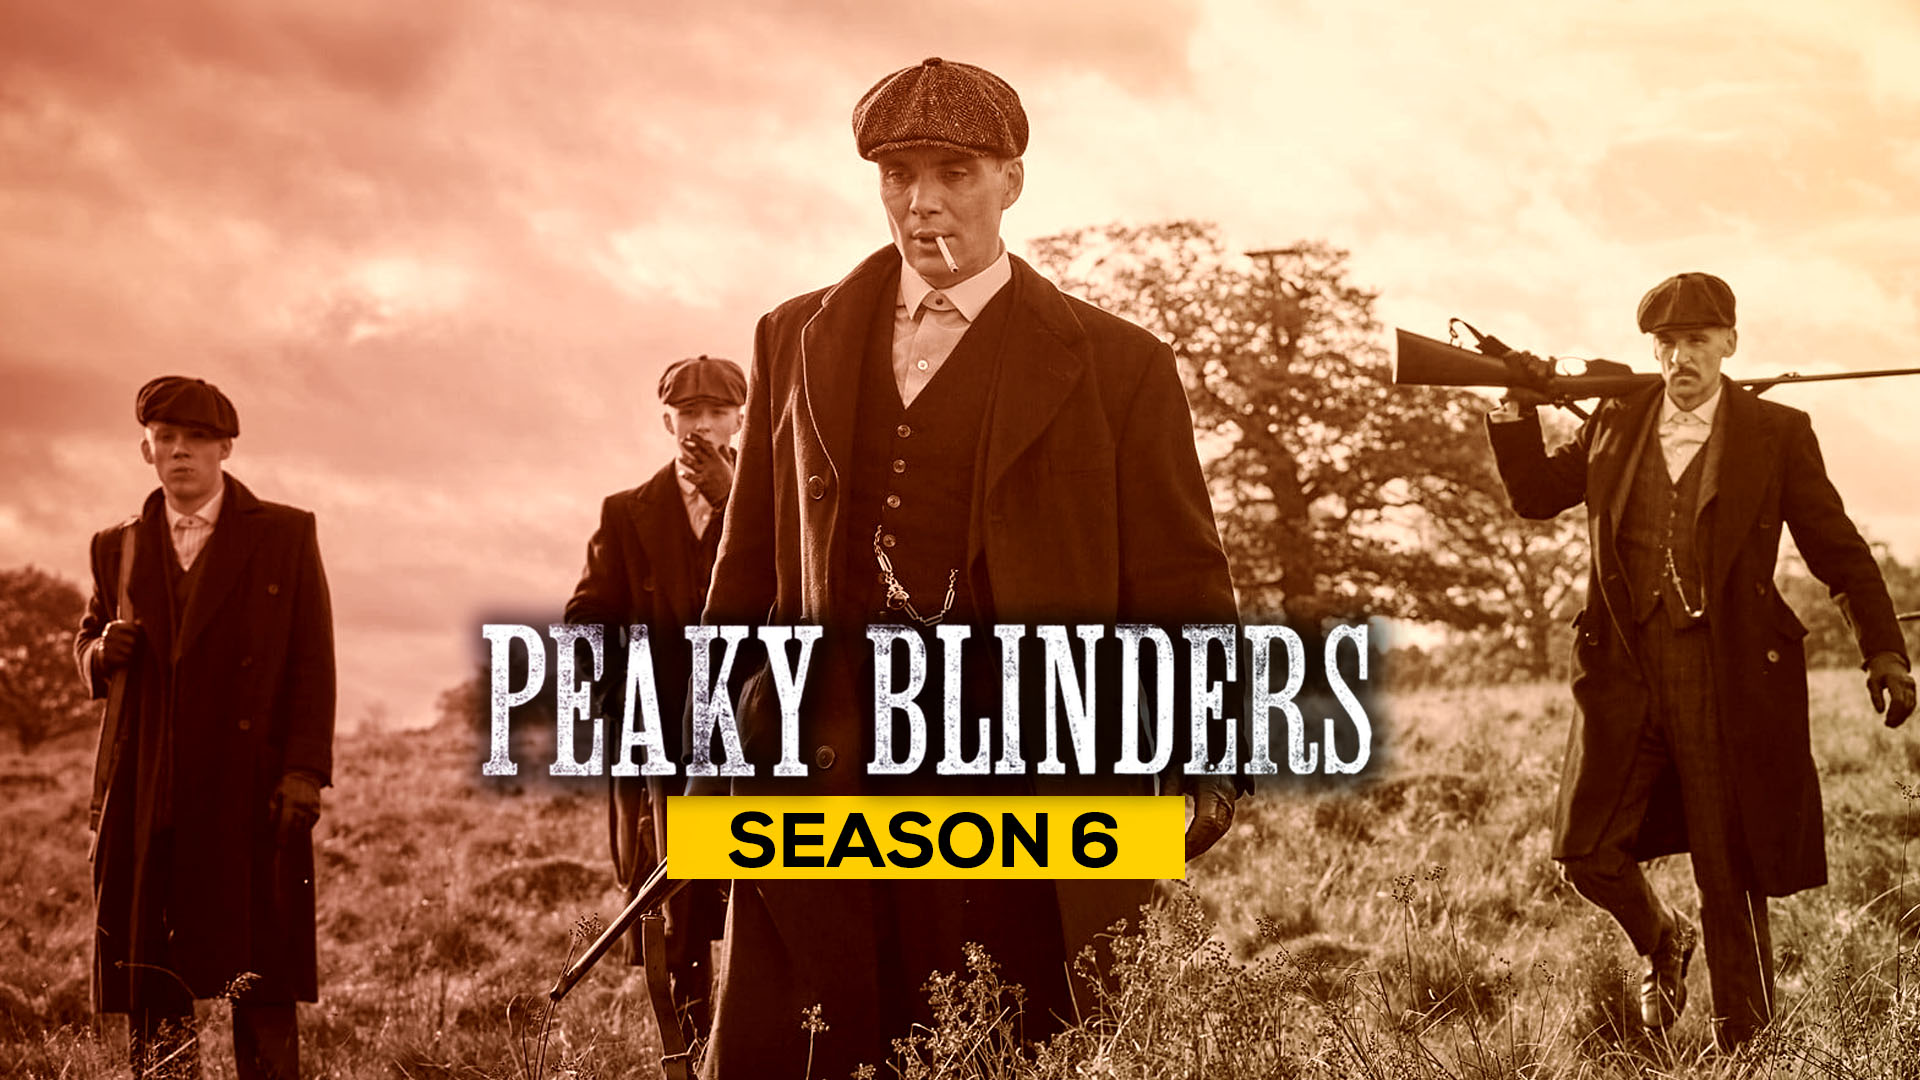 Peaky blinders season 6 on netflix